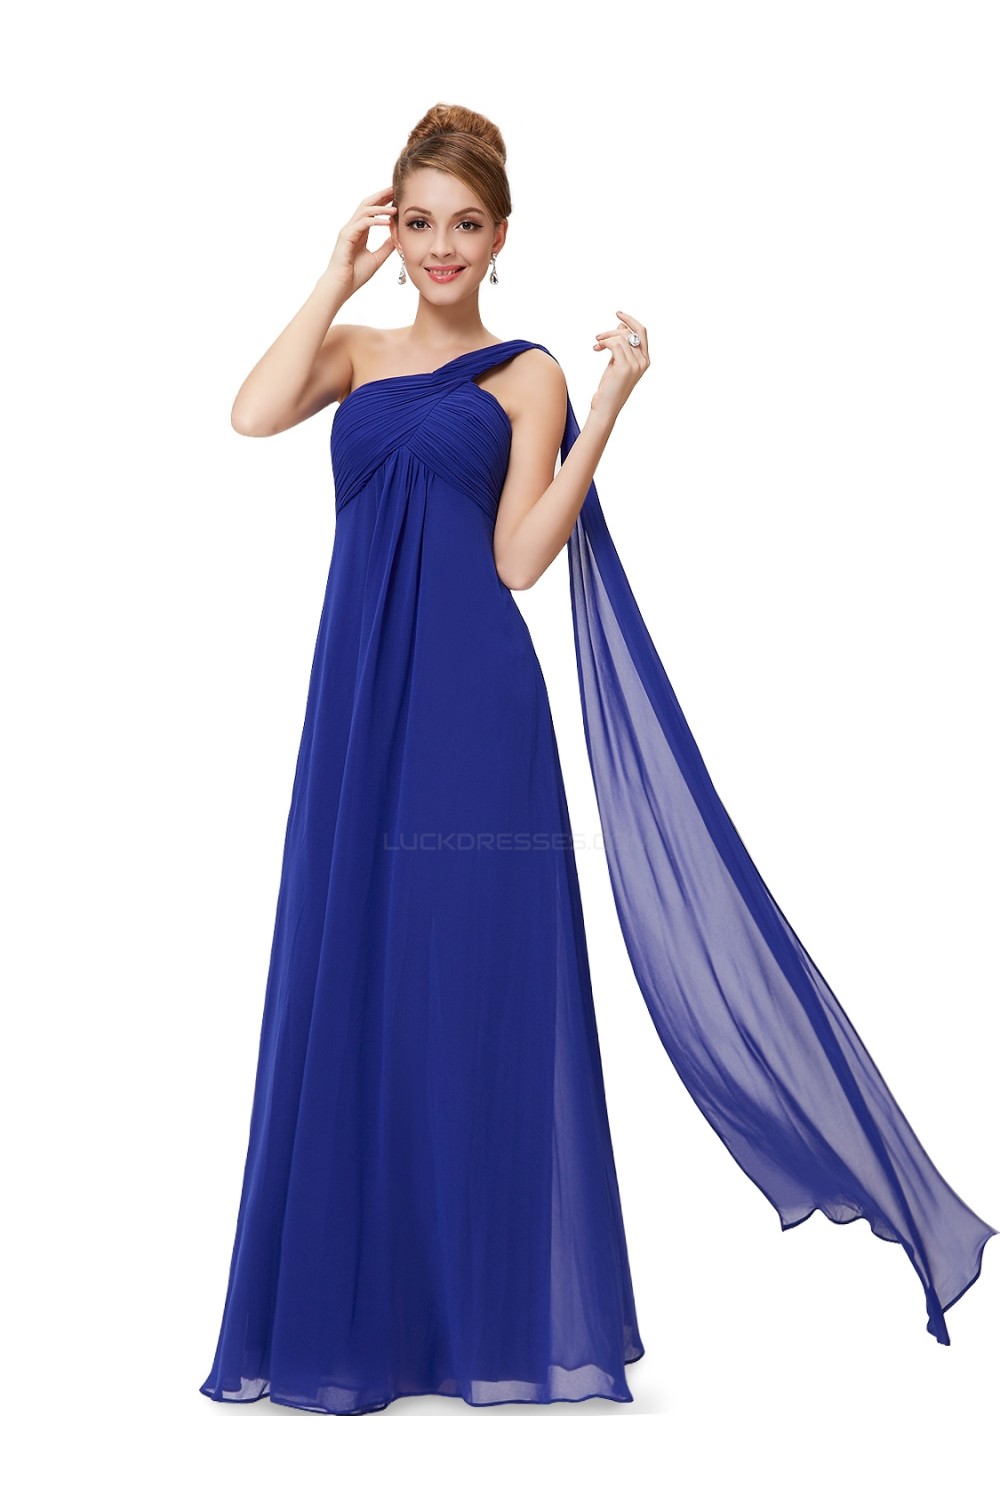 royal blue one shoulder bridesmaid dress